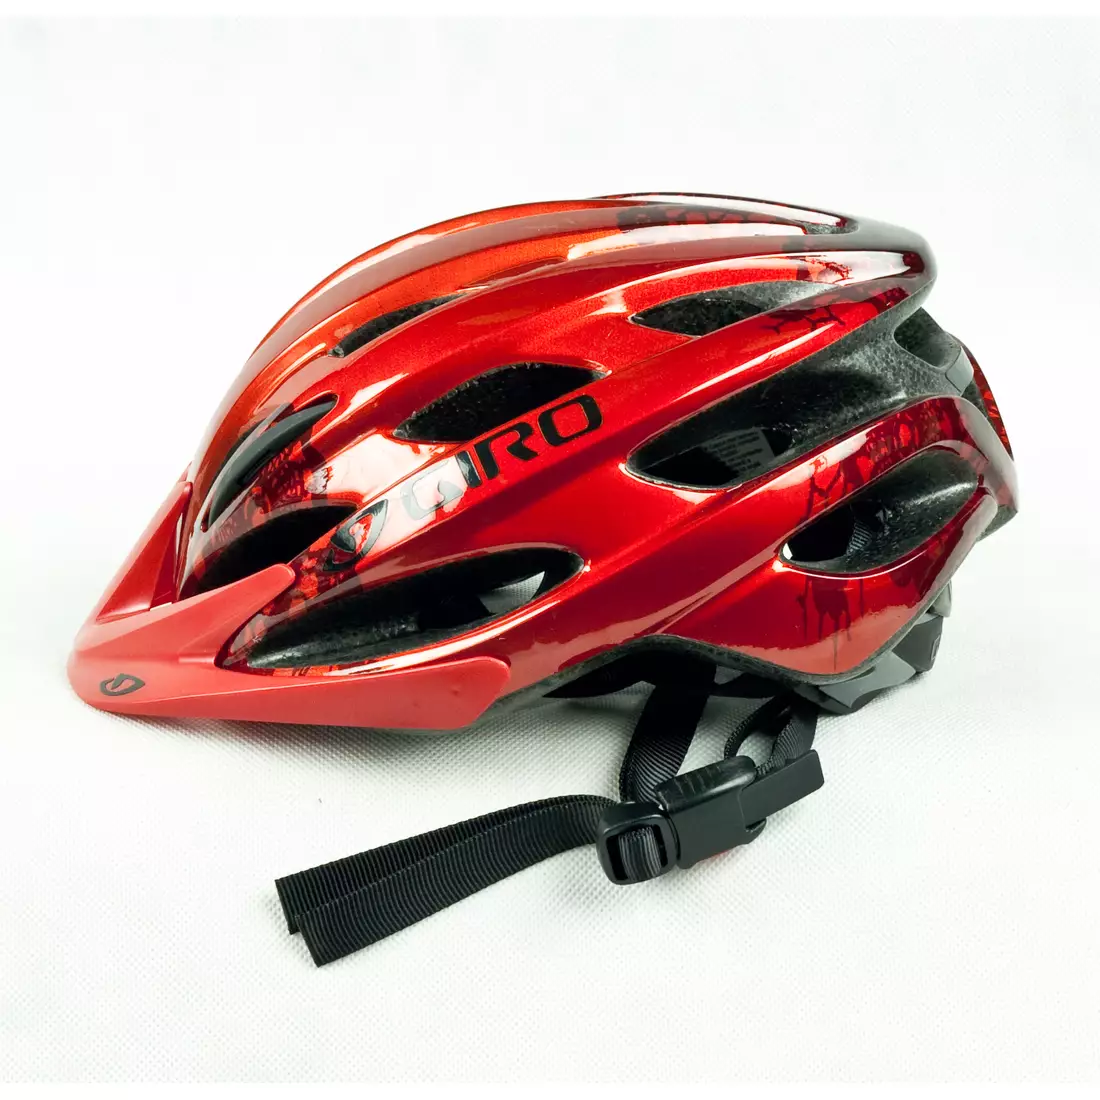 GIRO VERONA women's bicycle helmet, red / graphic